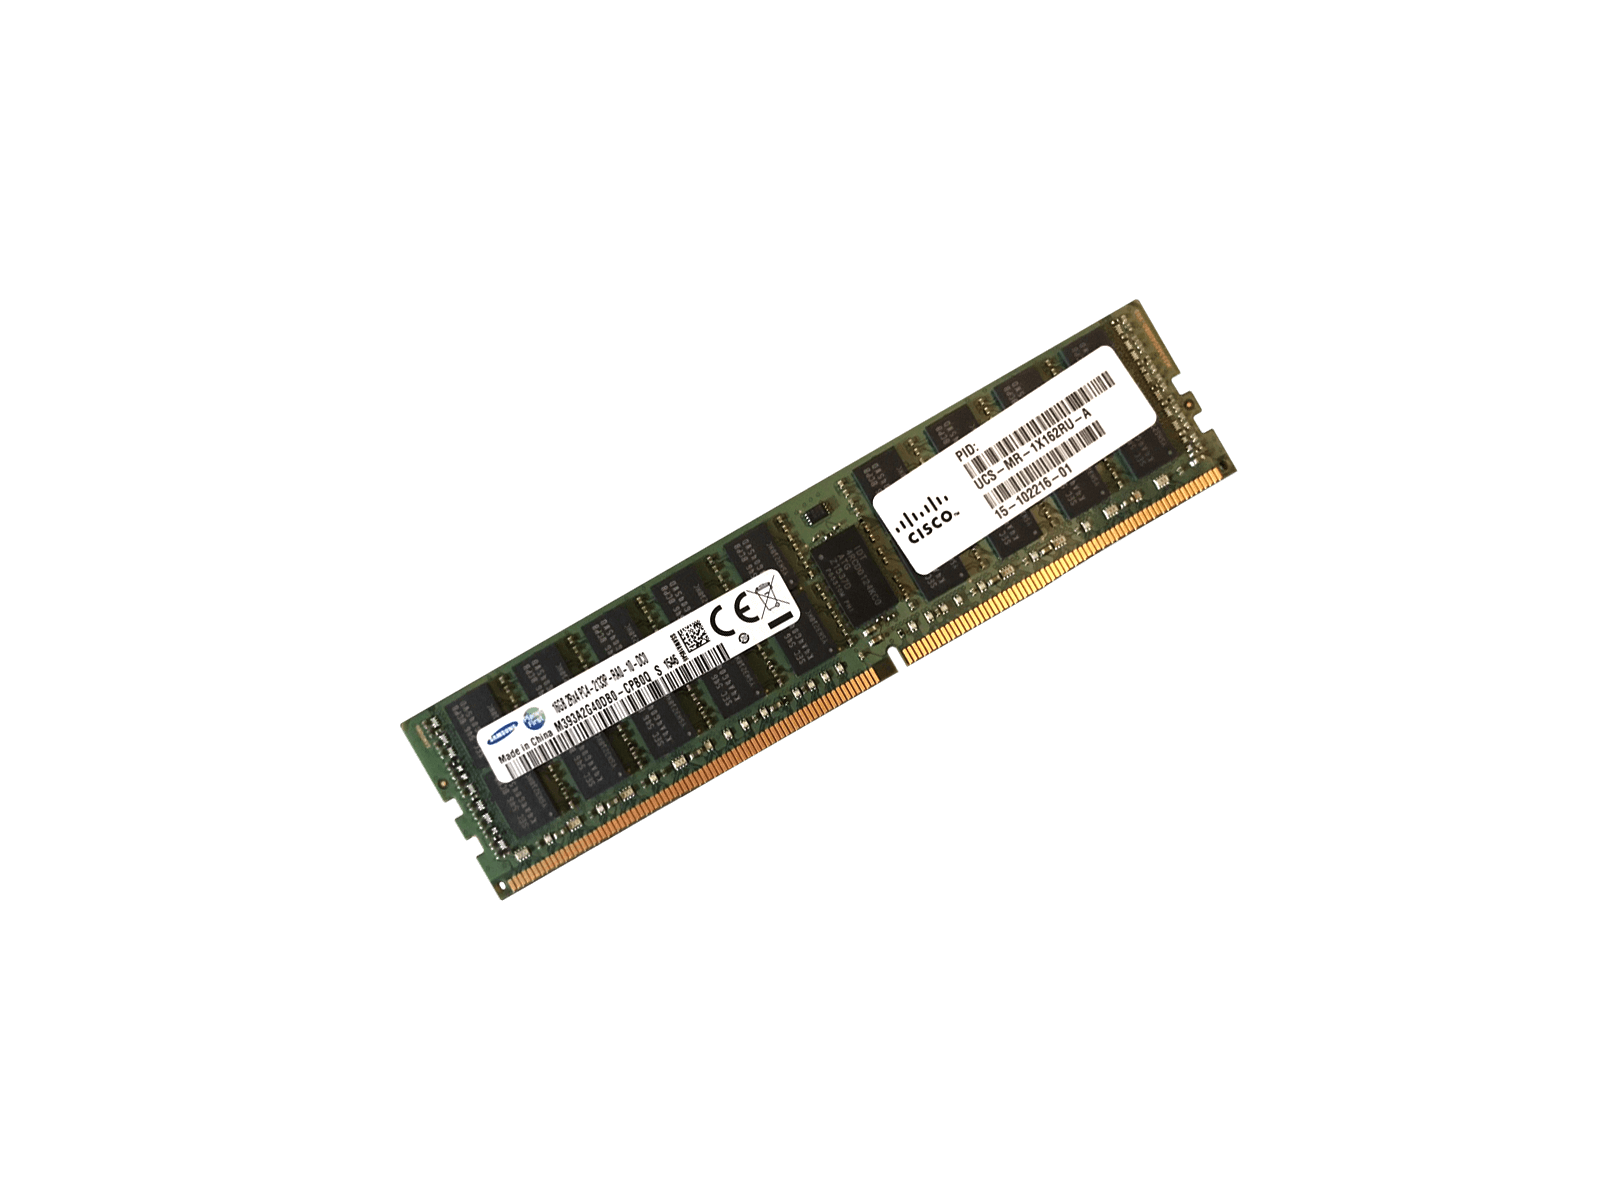 Cisco UCS-MR-1X162RU-A 1x16GB Dual Rank x4 DDR4 2133MHz RDIMM ECC CL15 Ram Memory